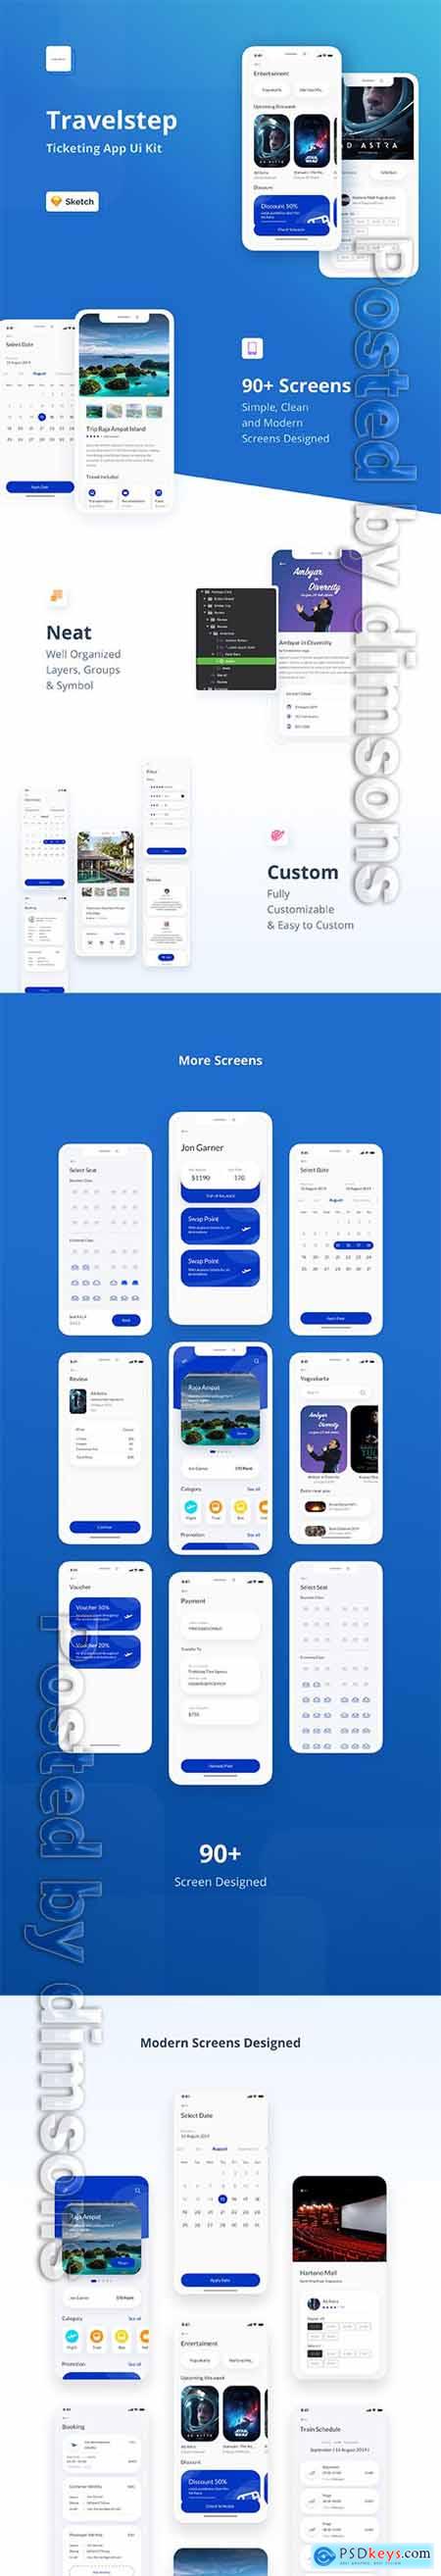 Travelstep Mobile Apps UI Kit